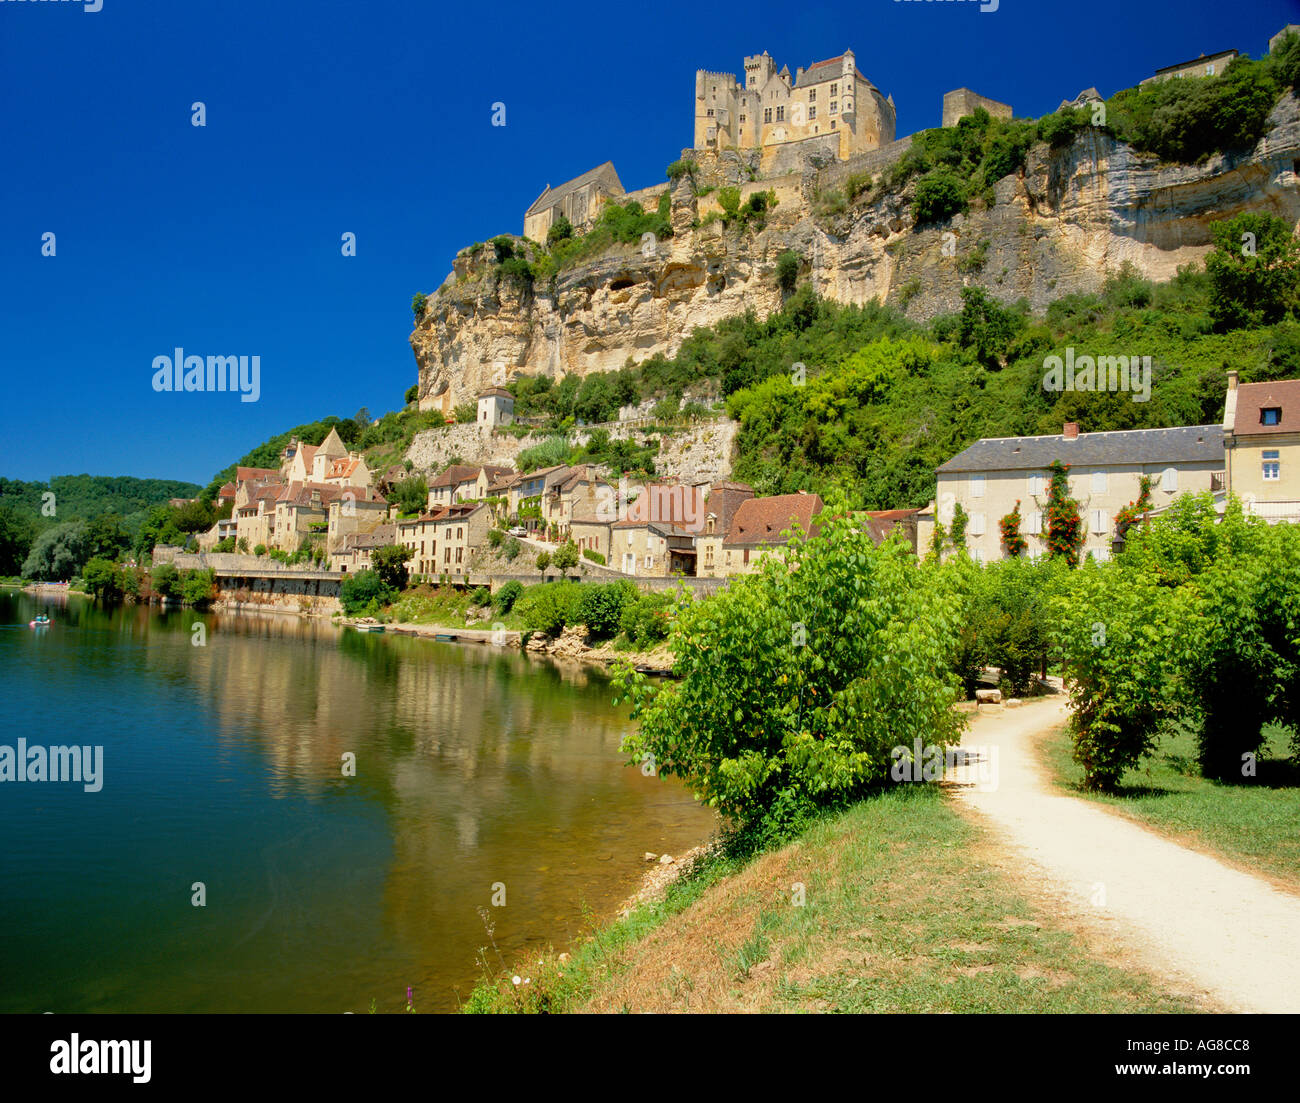 France Dordogne Beynac et Cazenac and Chateau Dordogne River Stock Photo